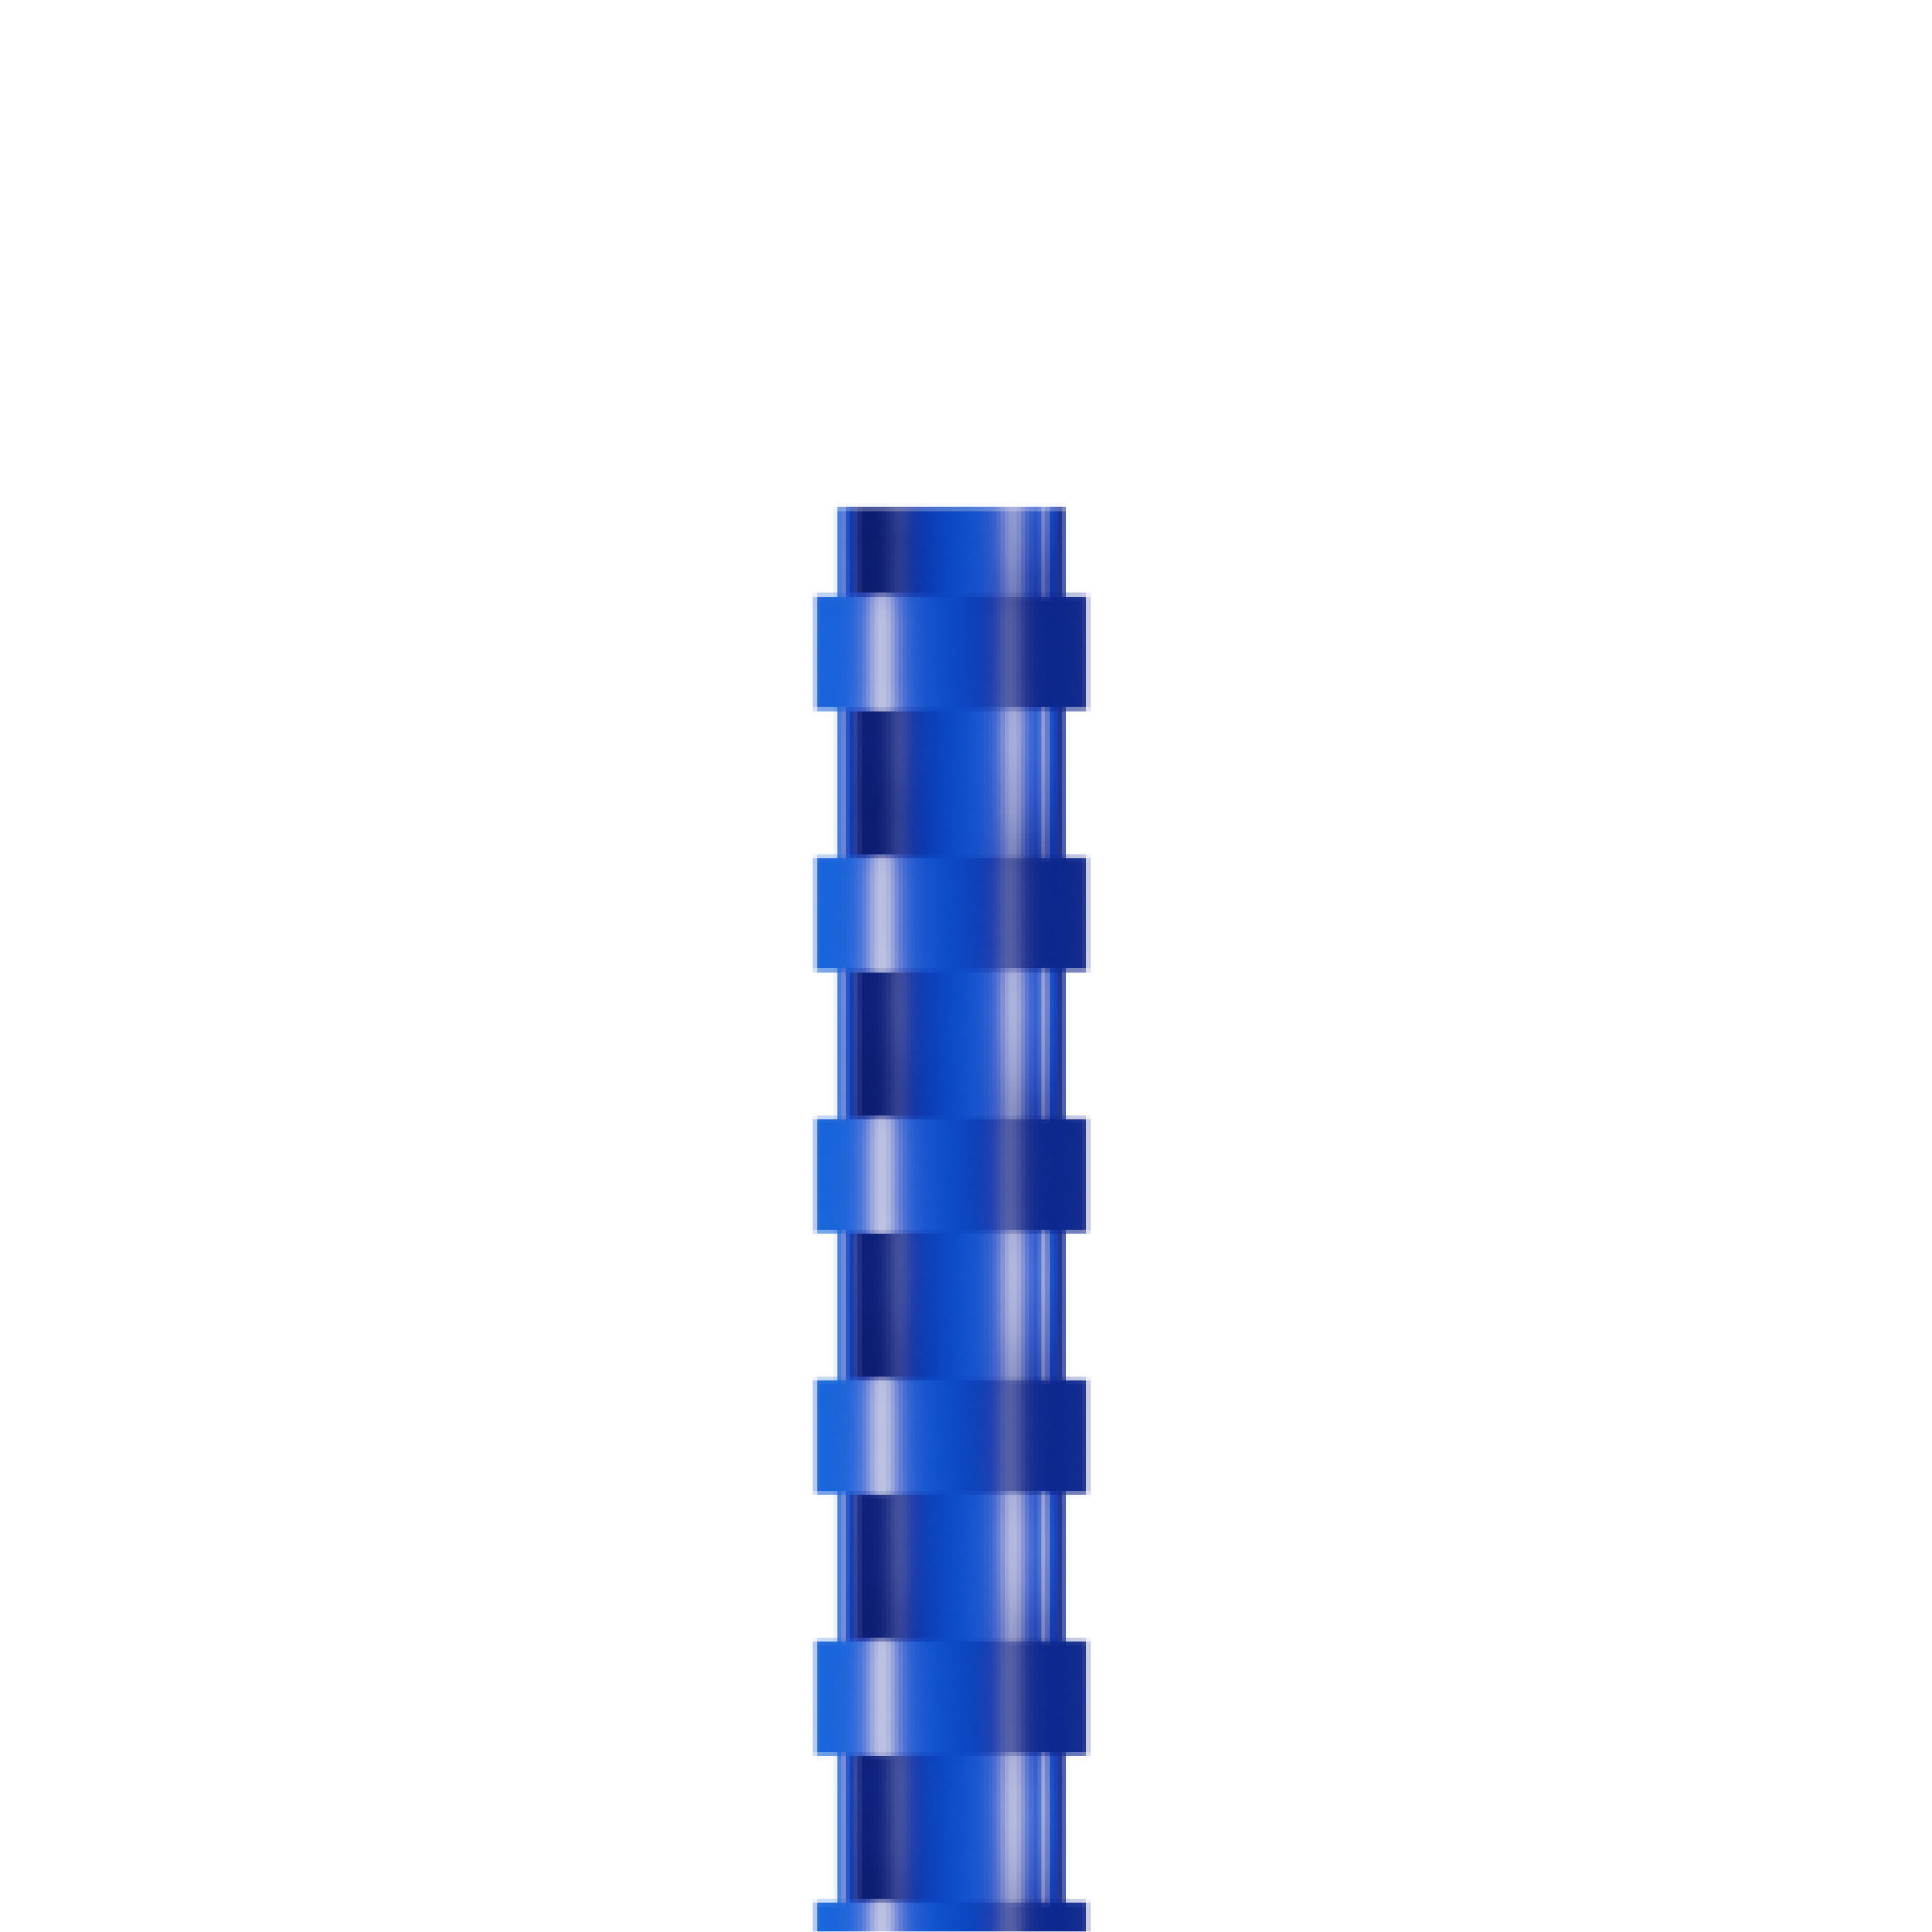 RAADO 14mm Plastic Spiral Binding Comb, Blue